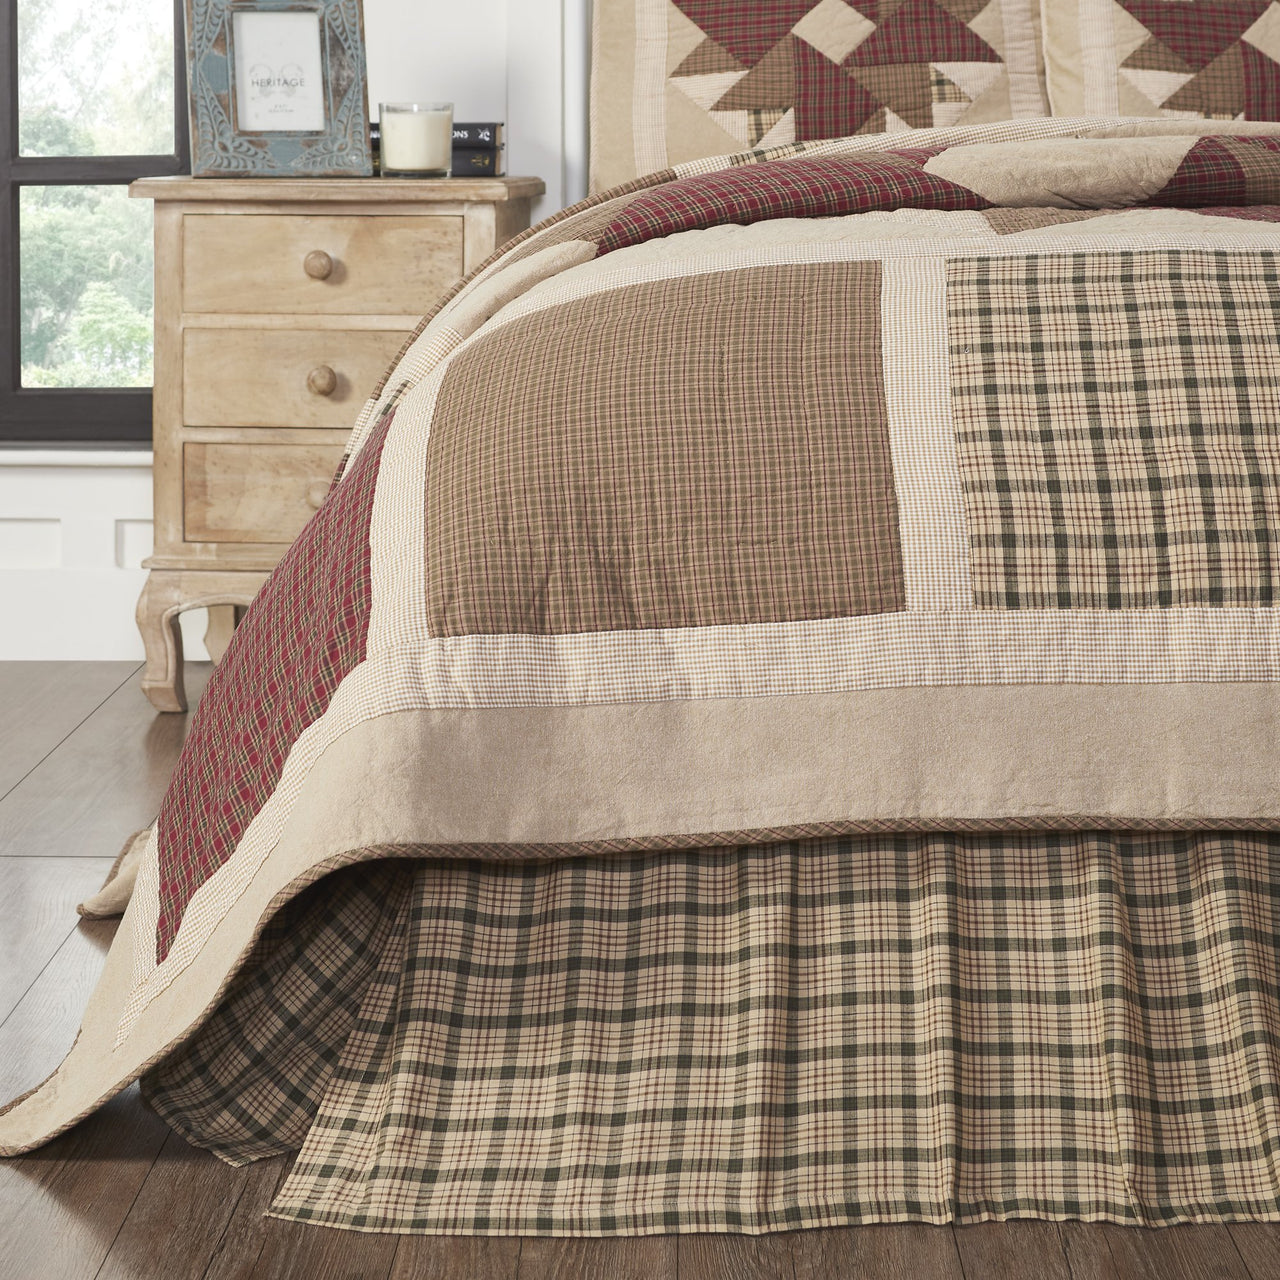 Cider Mill Queen Bed Skirt 60x80x16 VHC Brands